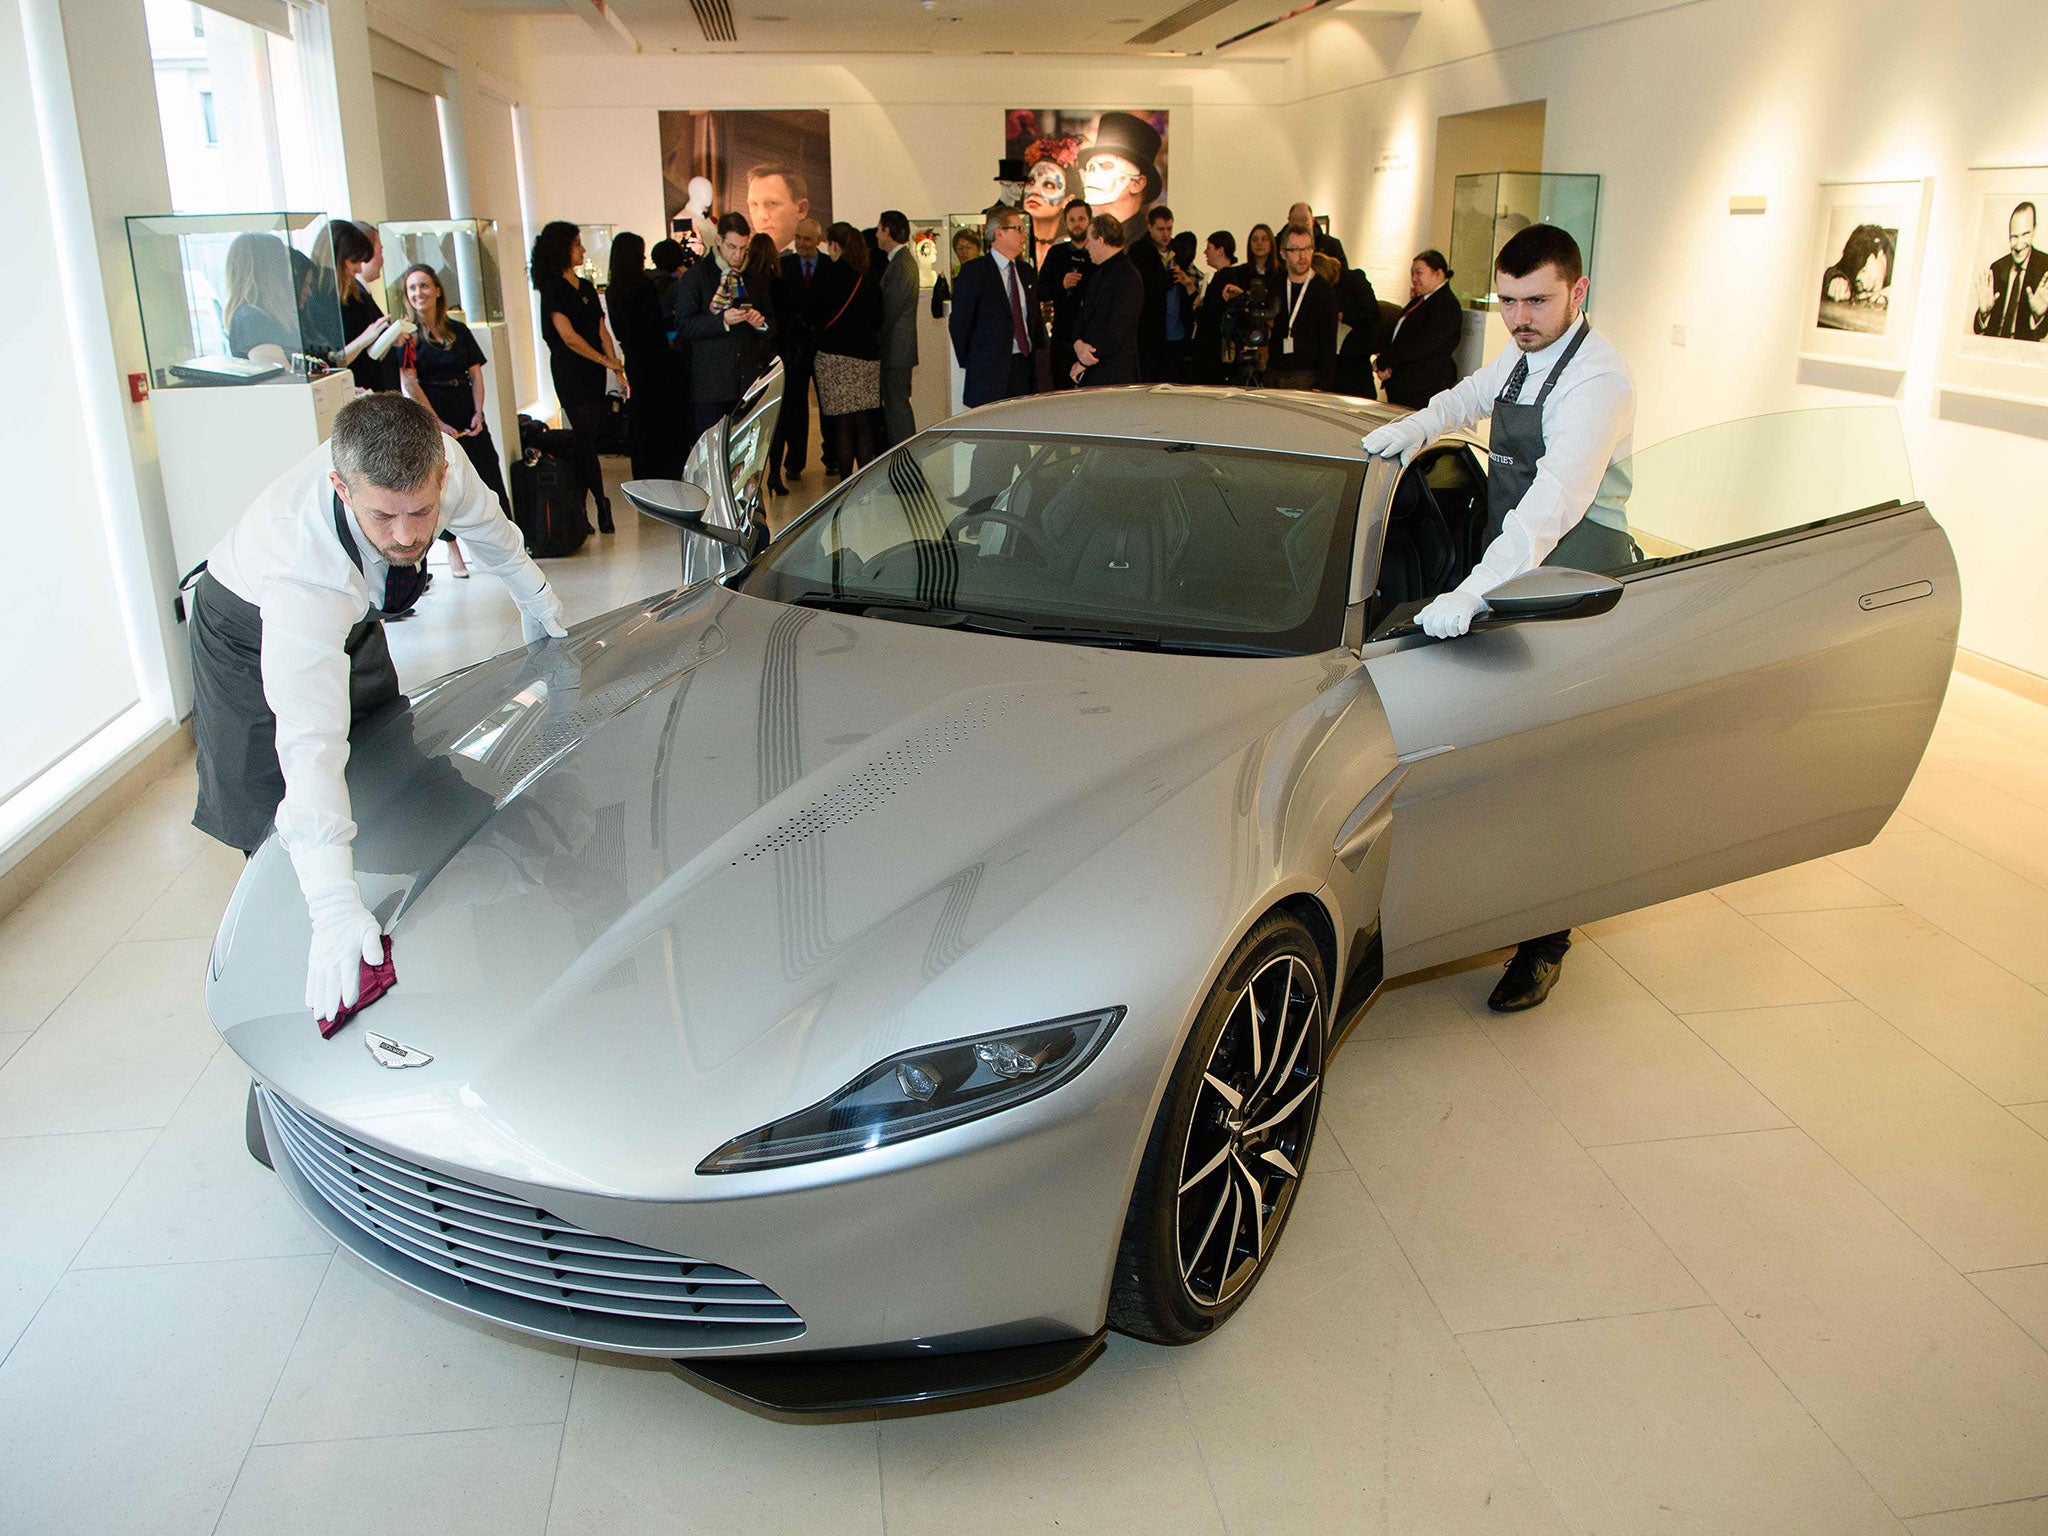 The Spectre Aston Martin at Christie's